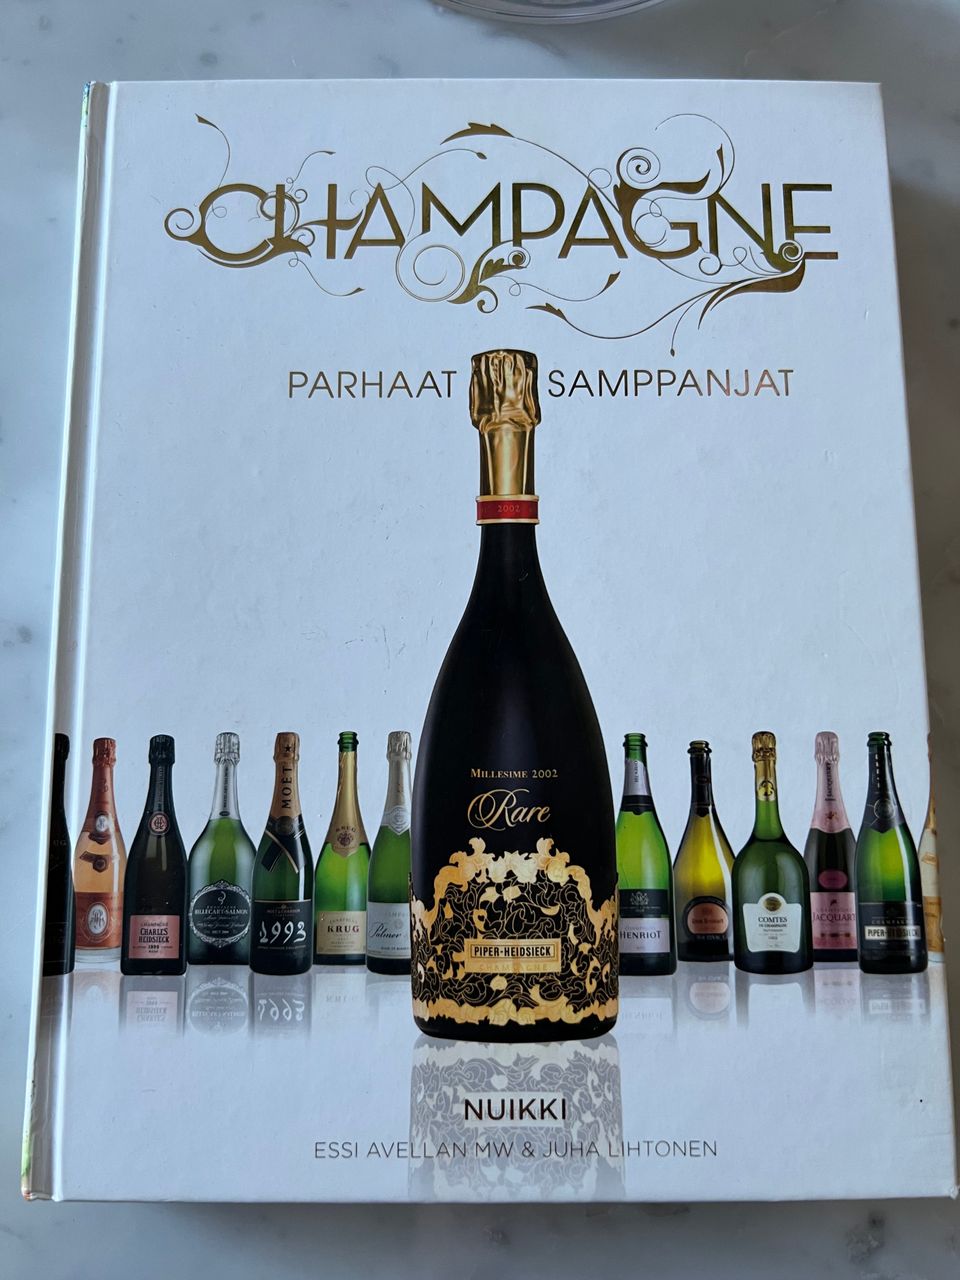 Champagne - Parhaat samppanjat